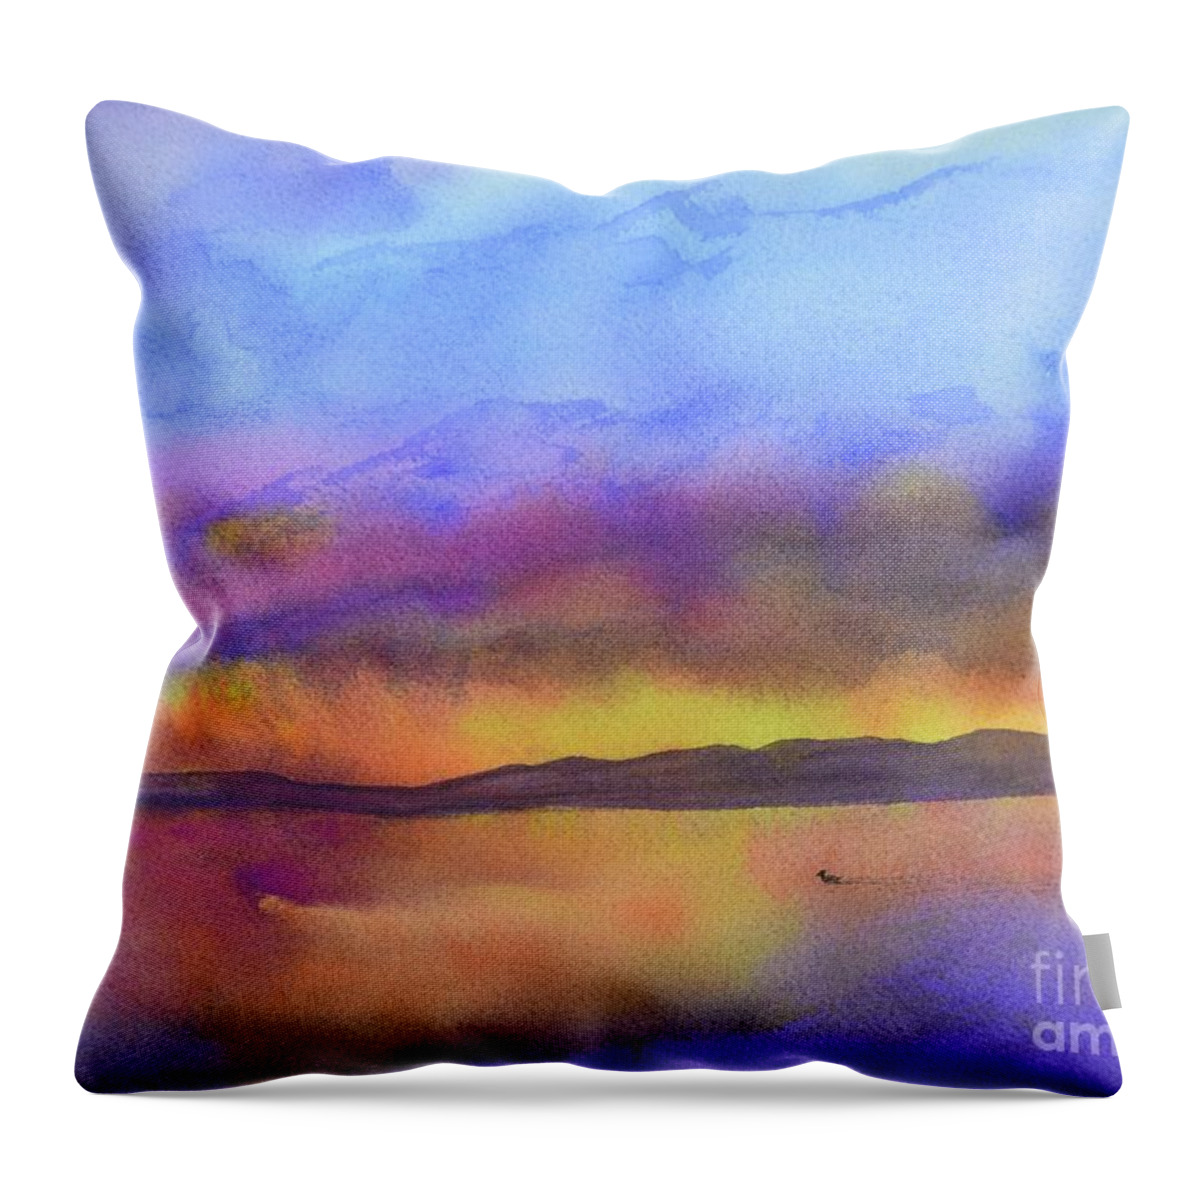  Barrieloustark Throw Pillow featuring the painting Purple Haze by Barrie Stark